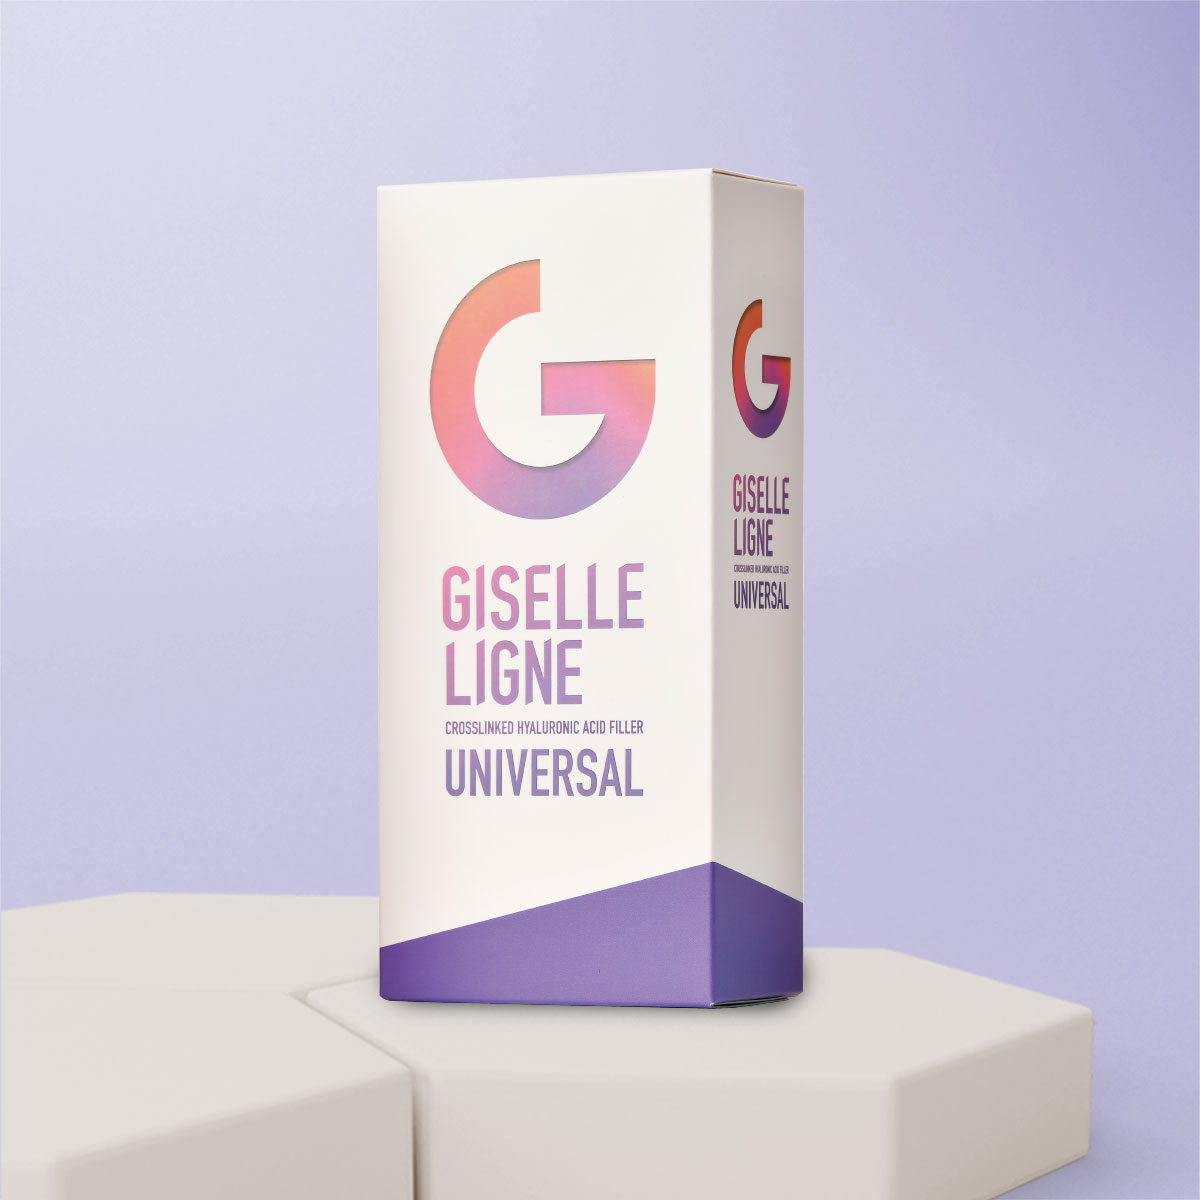 Giselle Ligne Universal